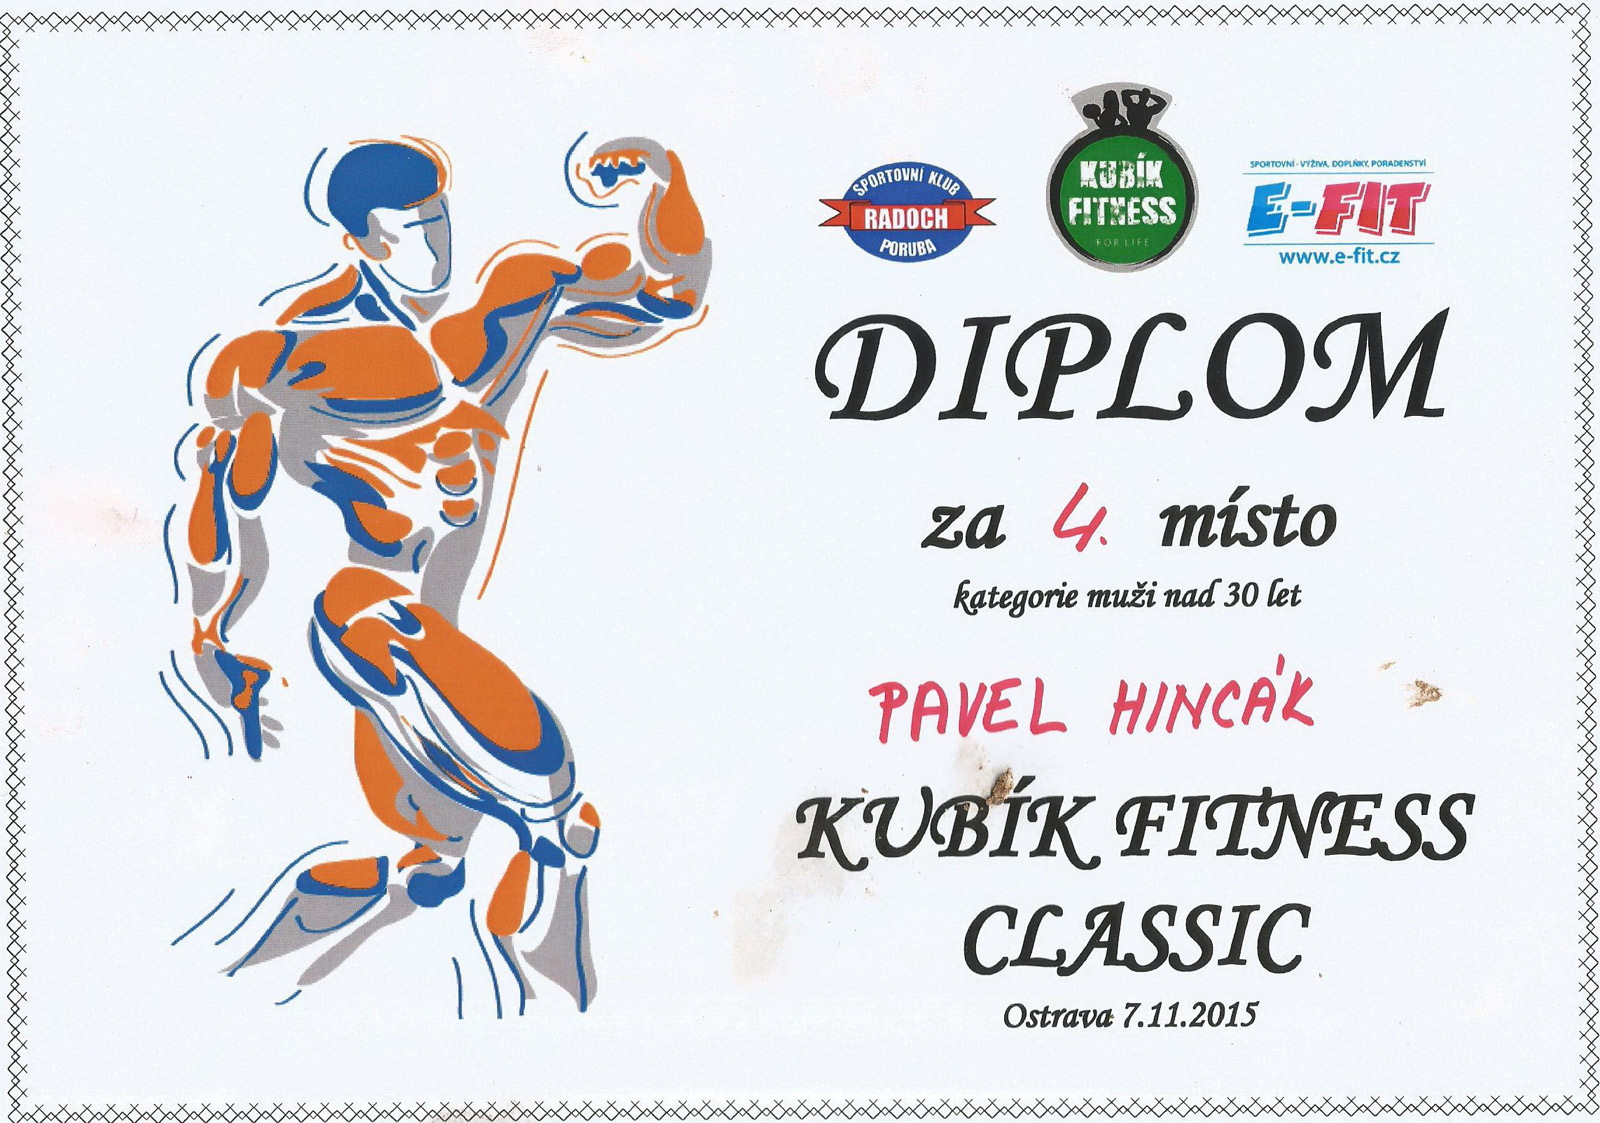 Kubik Fitness Classik 2015